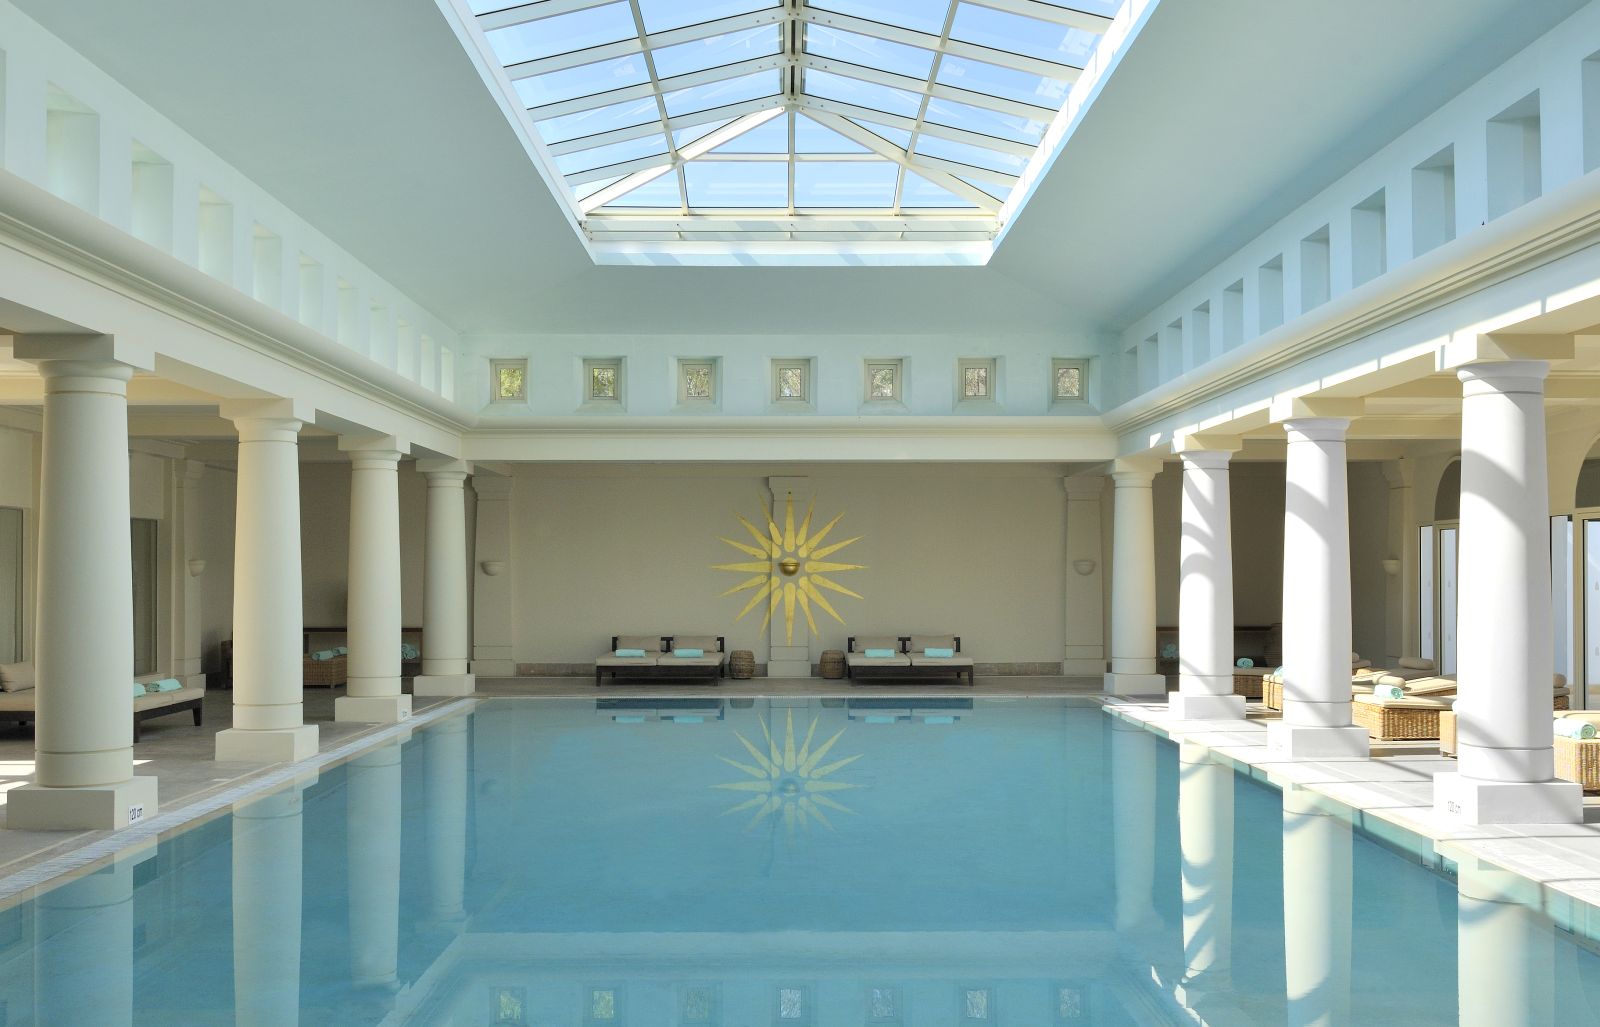 Indoor pool in the spa complex of the Anassa resort in Cyprus